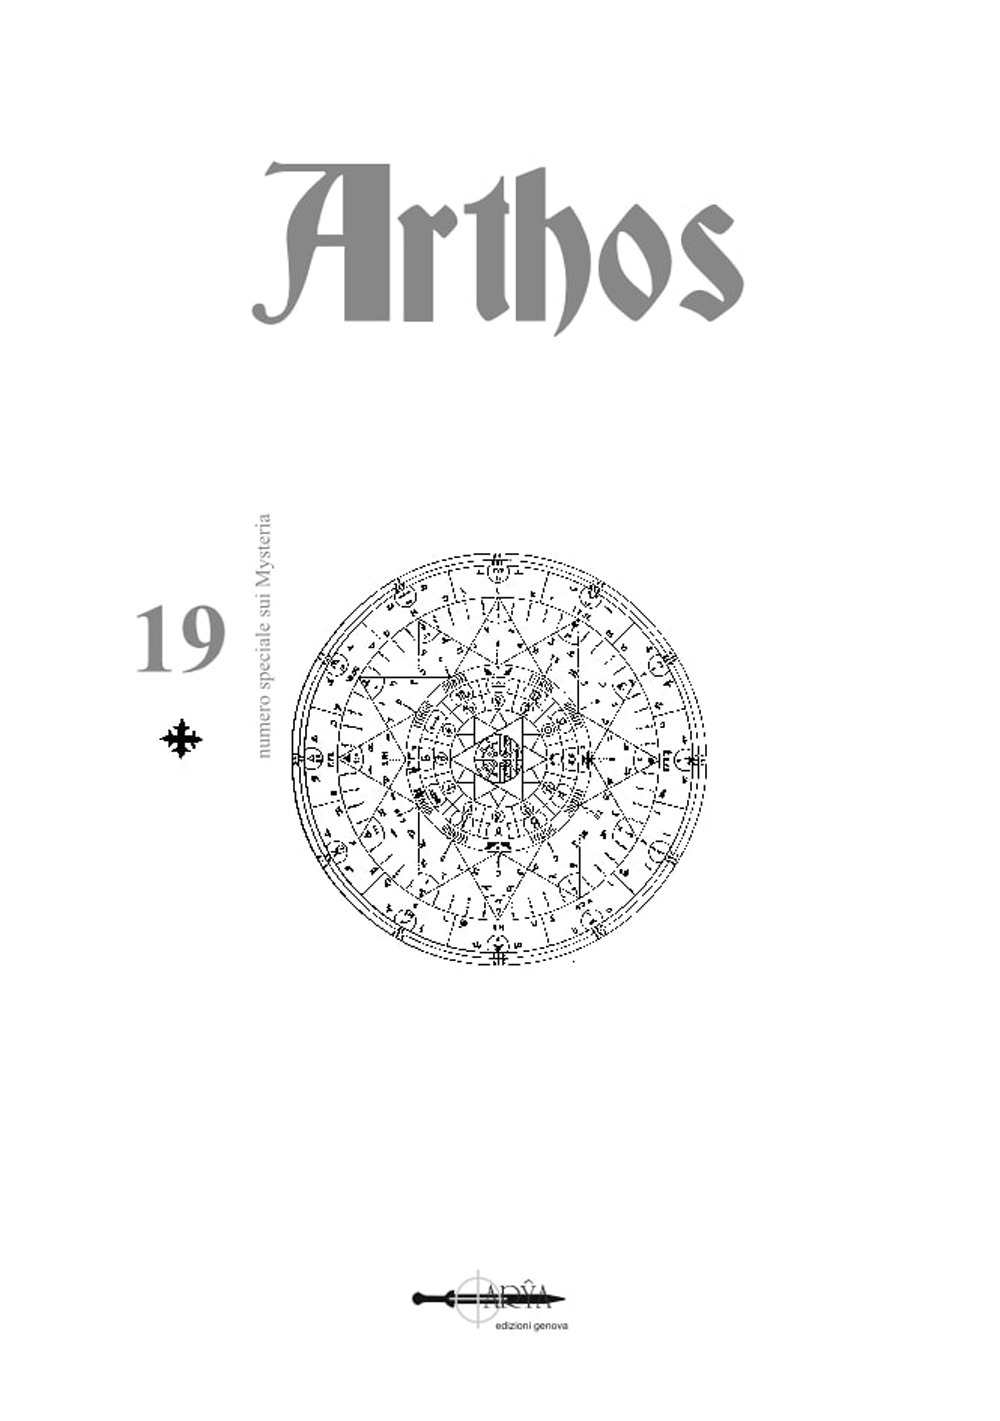 Arthos. Vol. 19: Numero speciale sui Mysteria